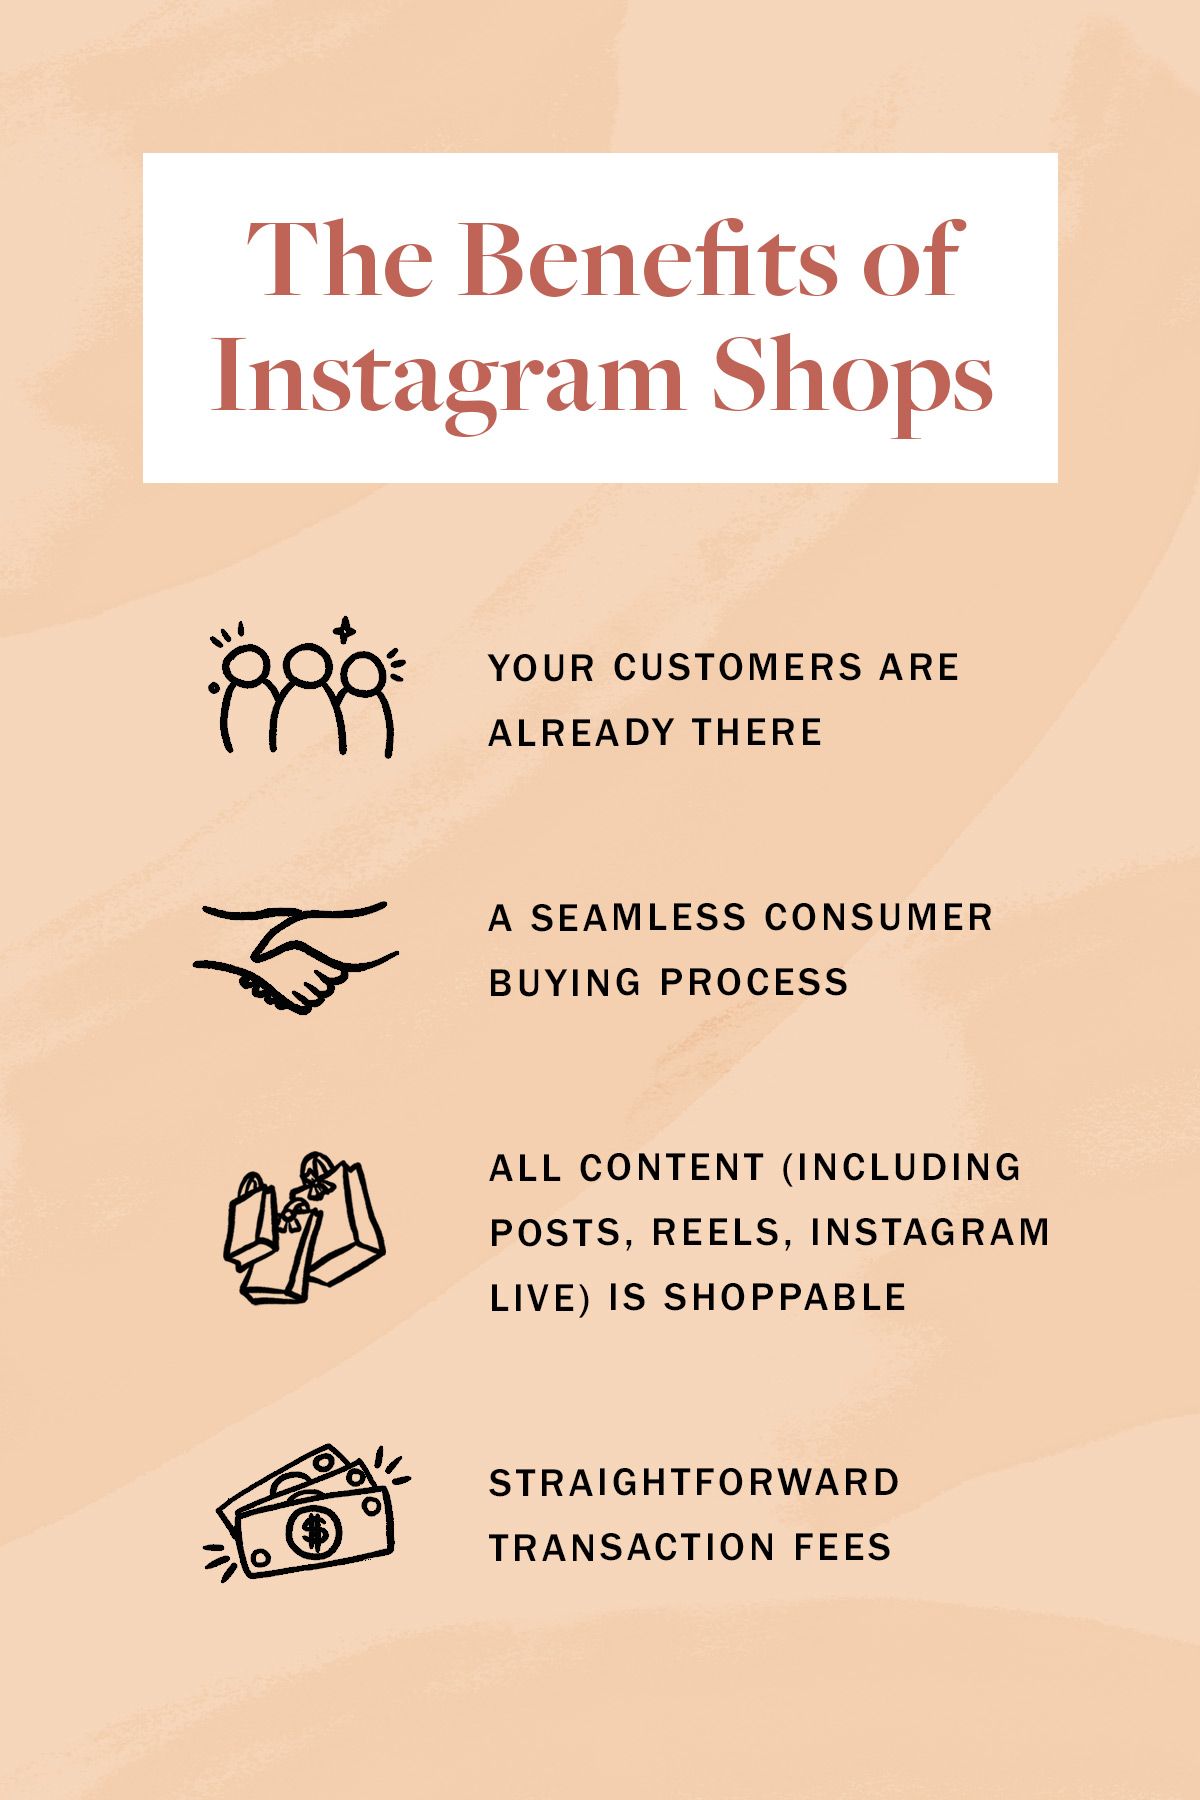 PLANOLY-Blog Post-Instagram Shopping Guide-Image 1-1